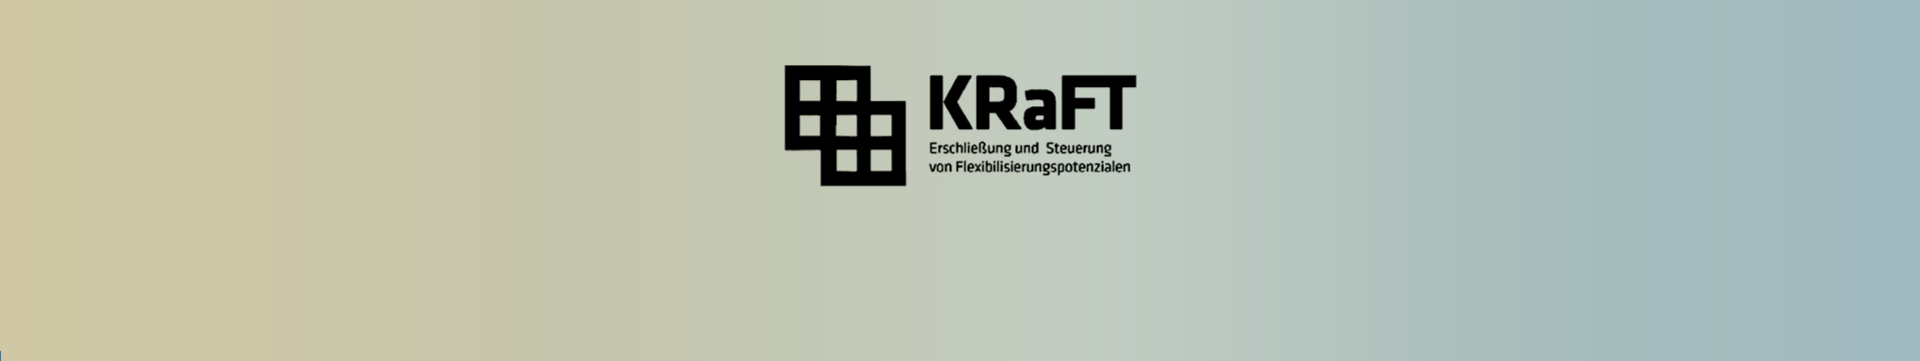 Projekt KraFT